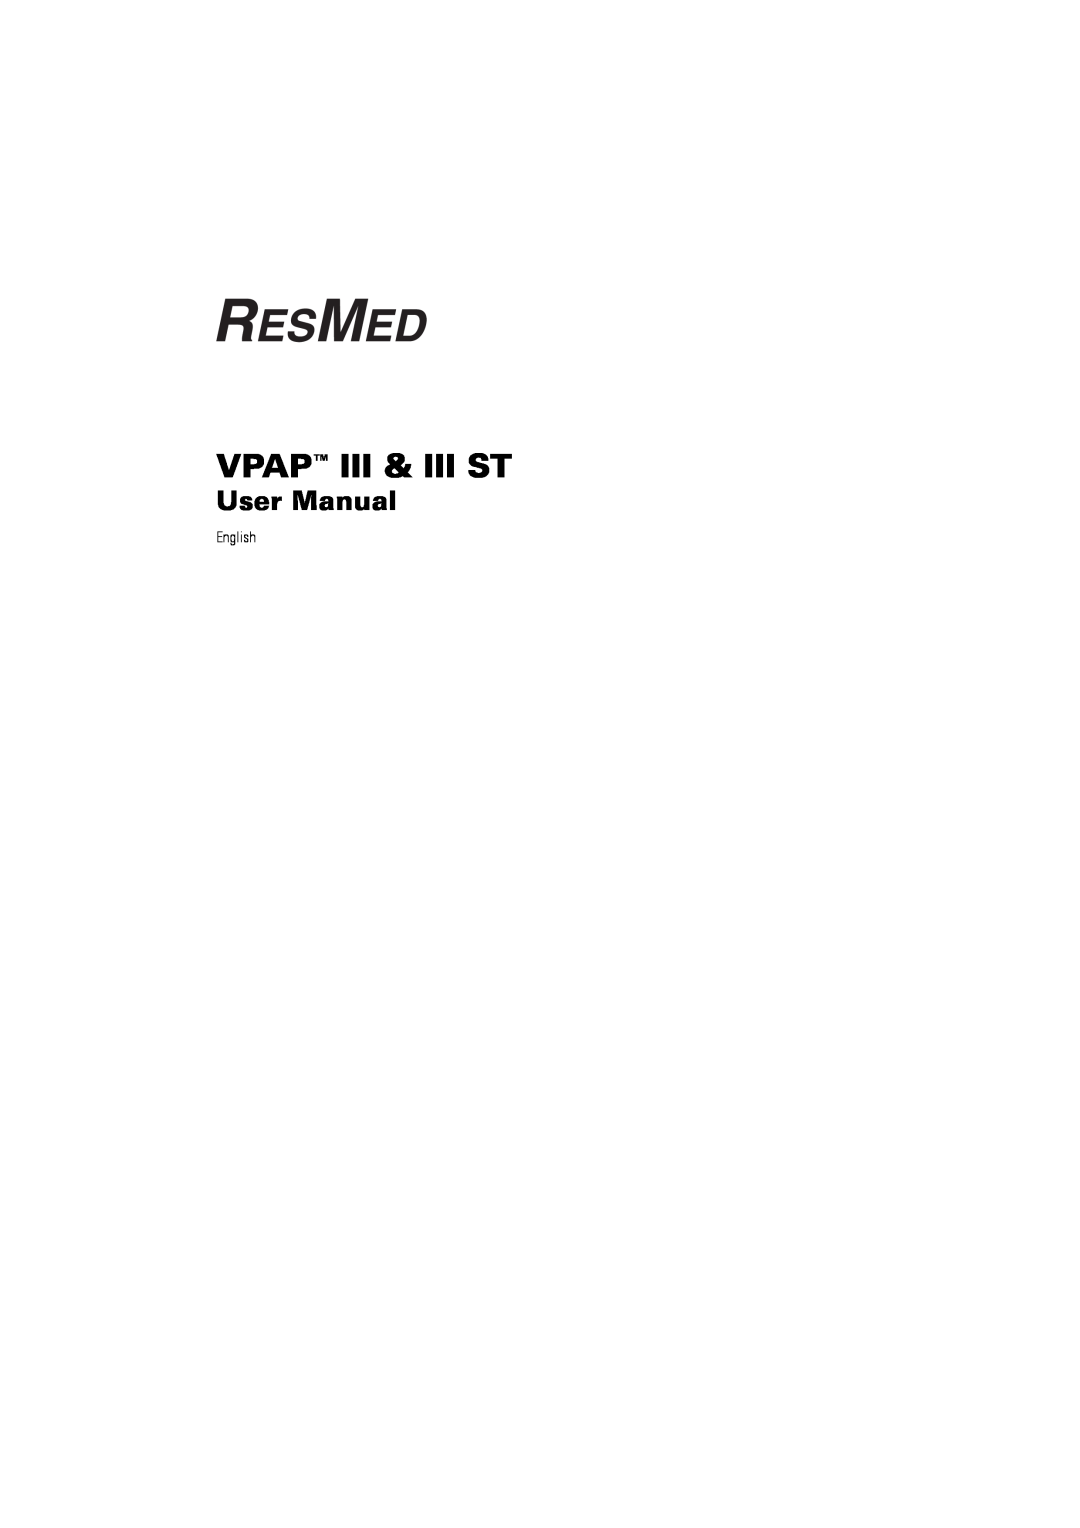 ResMed III user manual Vpap Iii & Iii St 